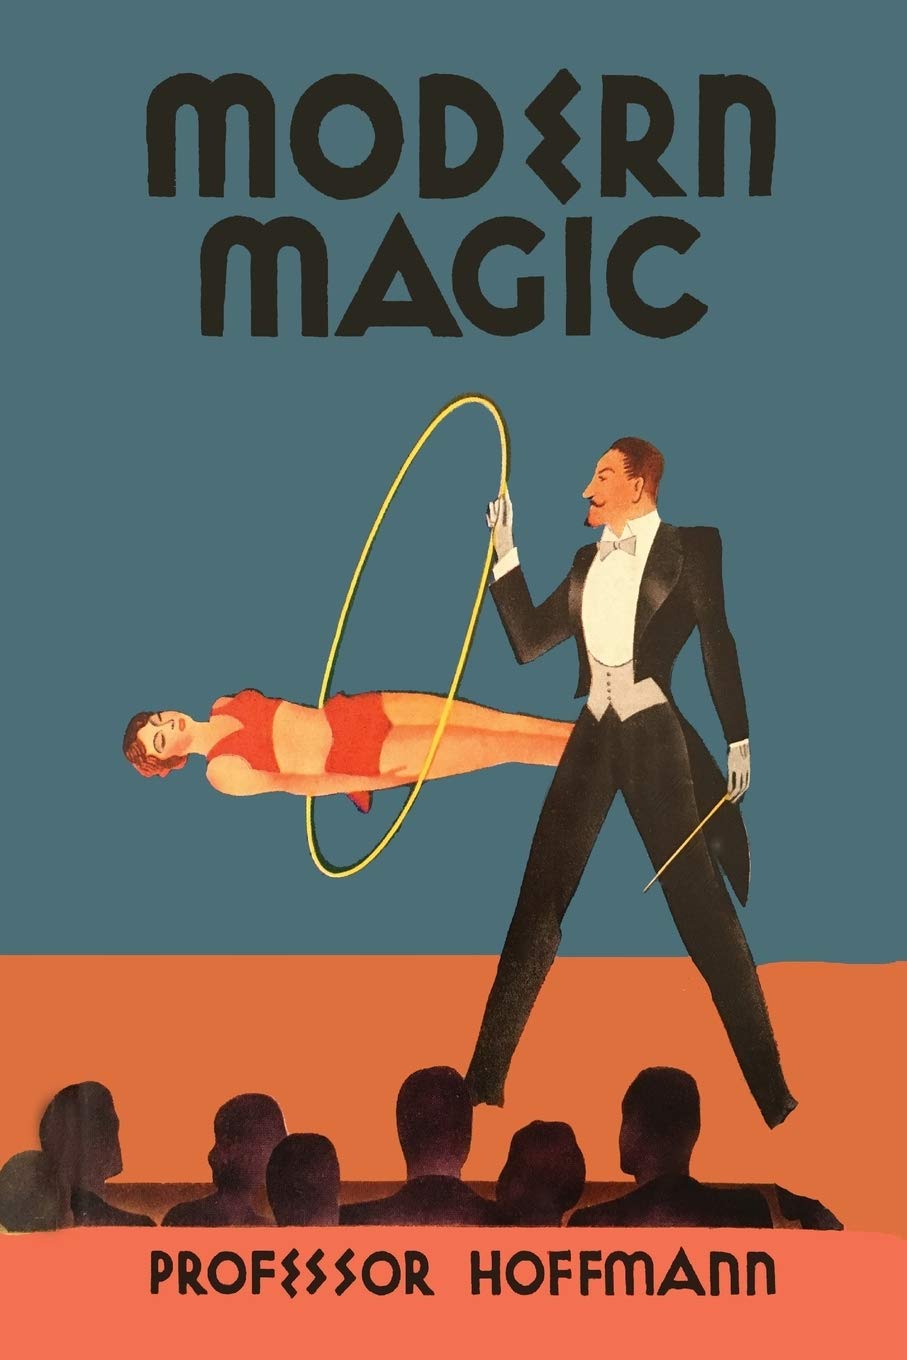 books about magic10